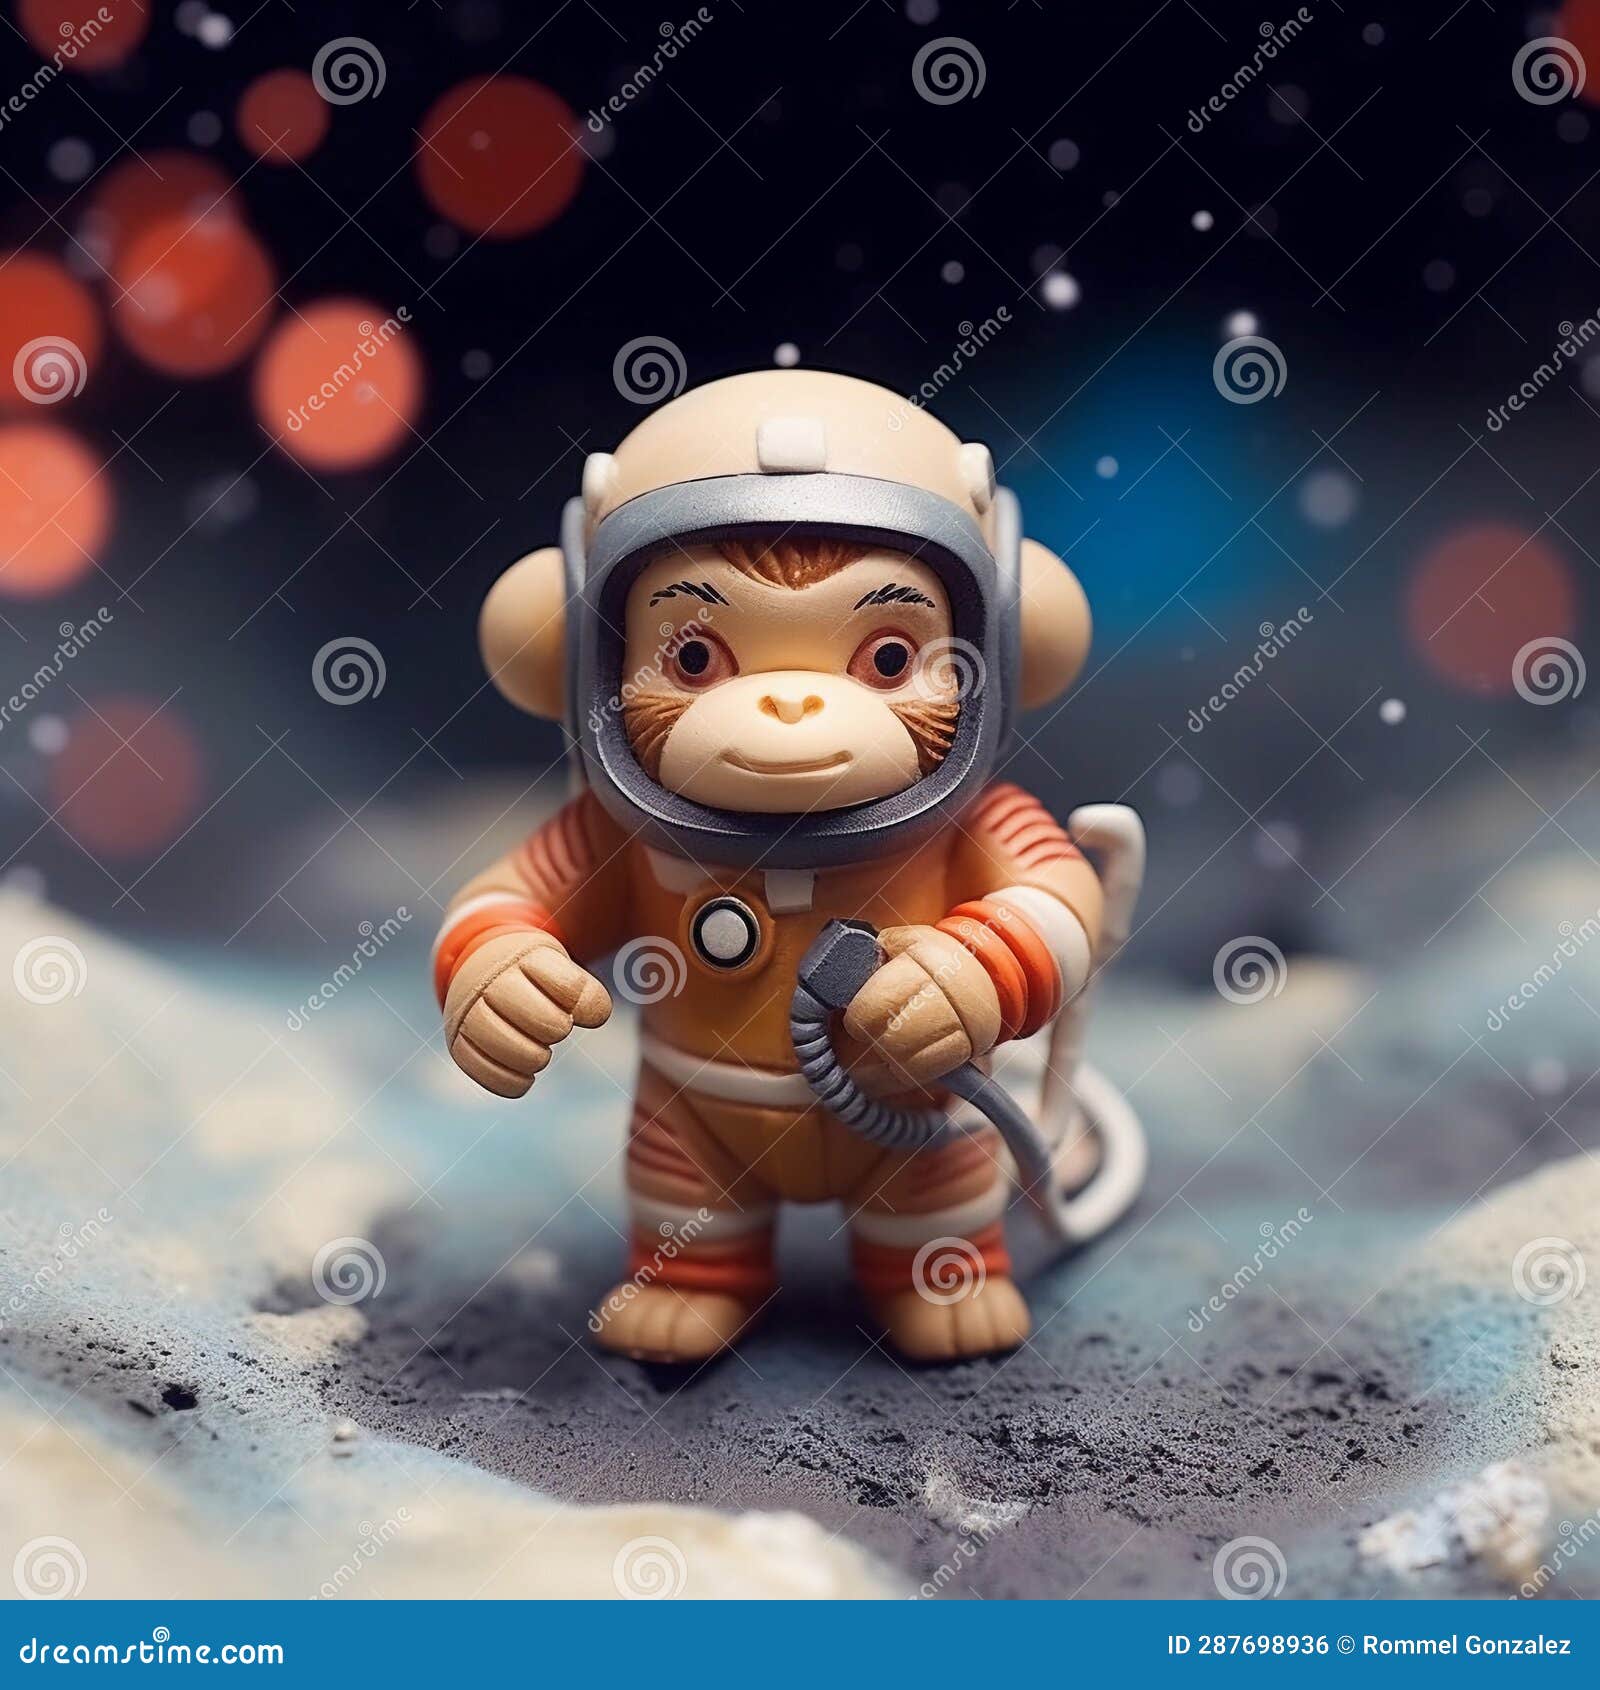 cartoon monkey astronaut walking on lunar surface. espacial travel concept